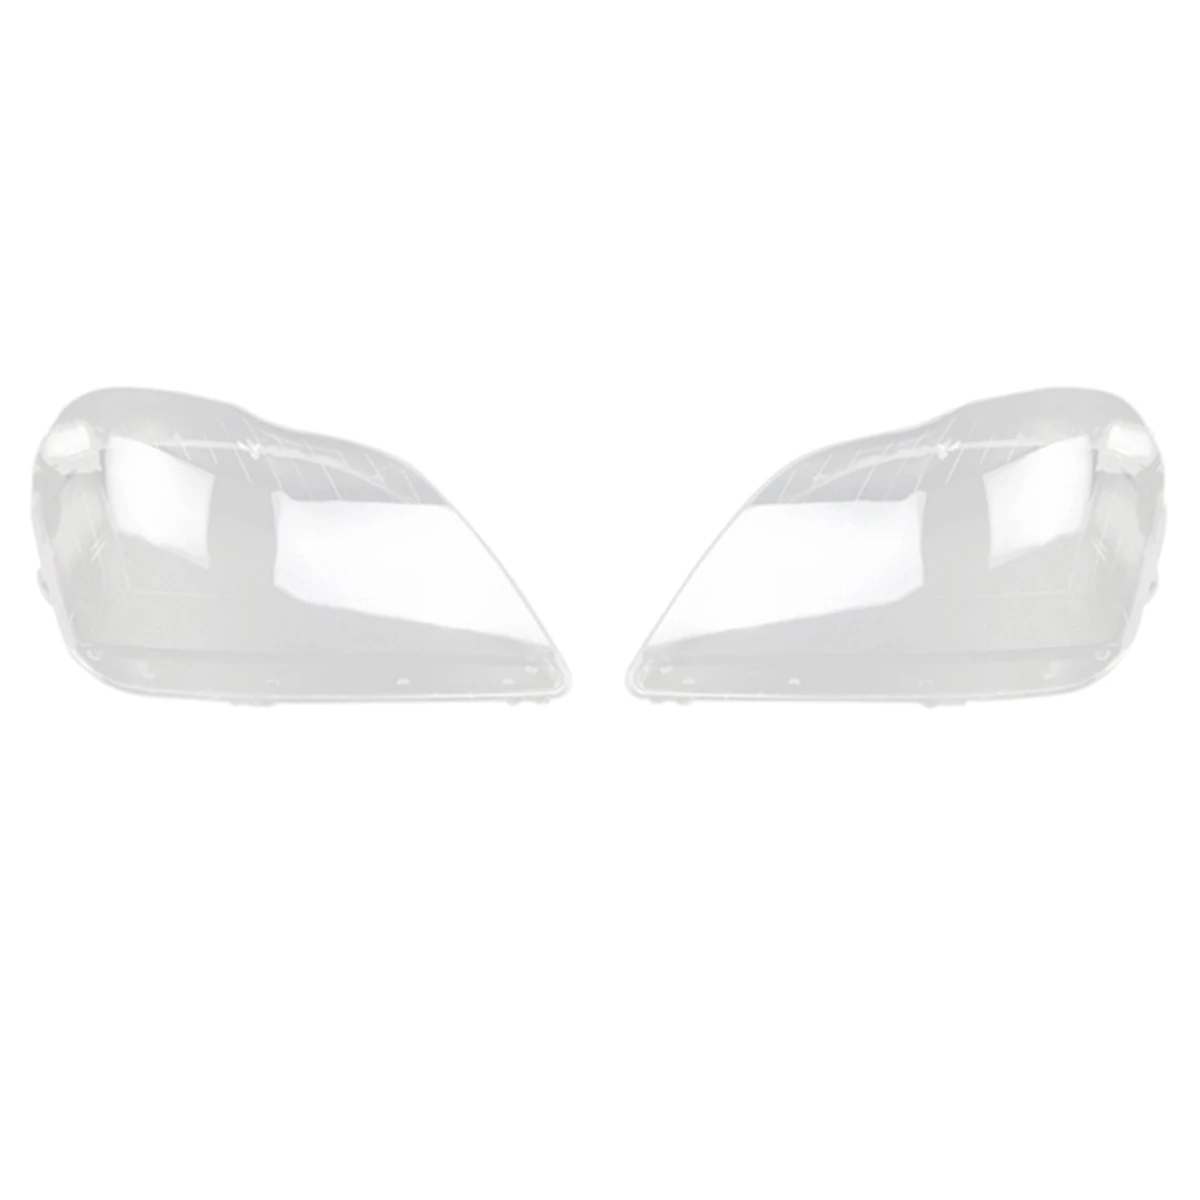 

1Pair Car Front Headlight Head Light Lamp Lens Cover for-Benz GL320 GL350 GL450 GL550 2007-2012